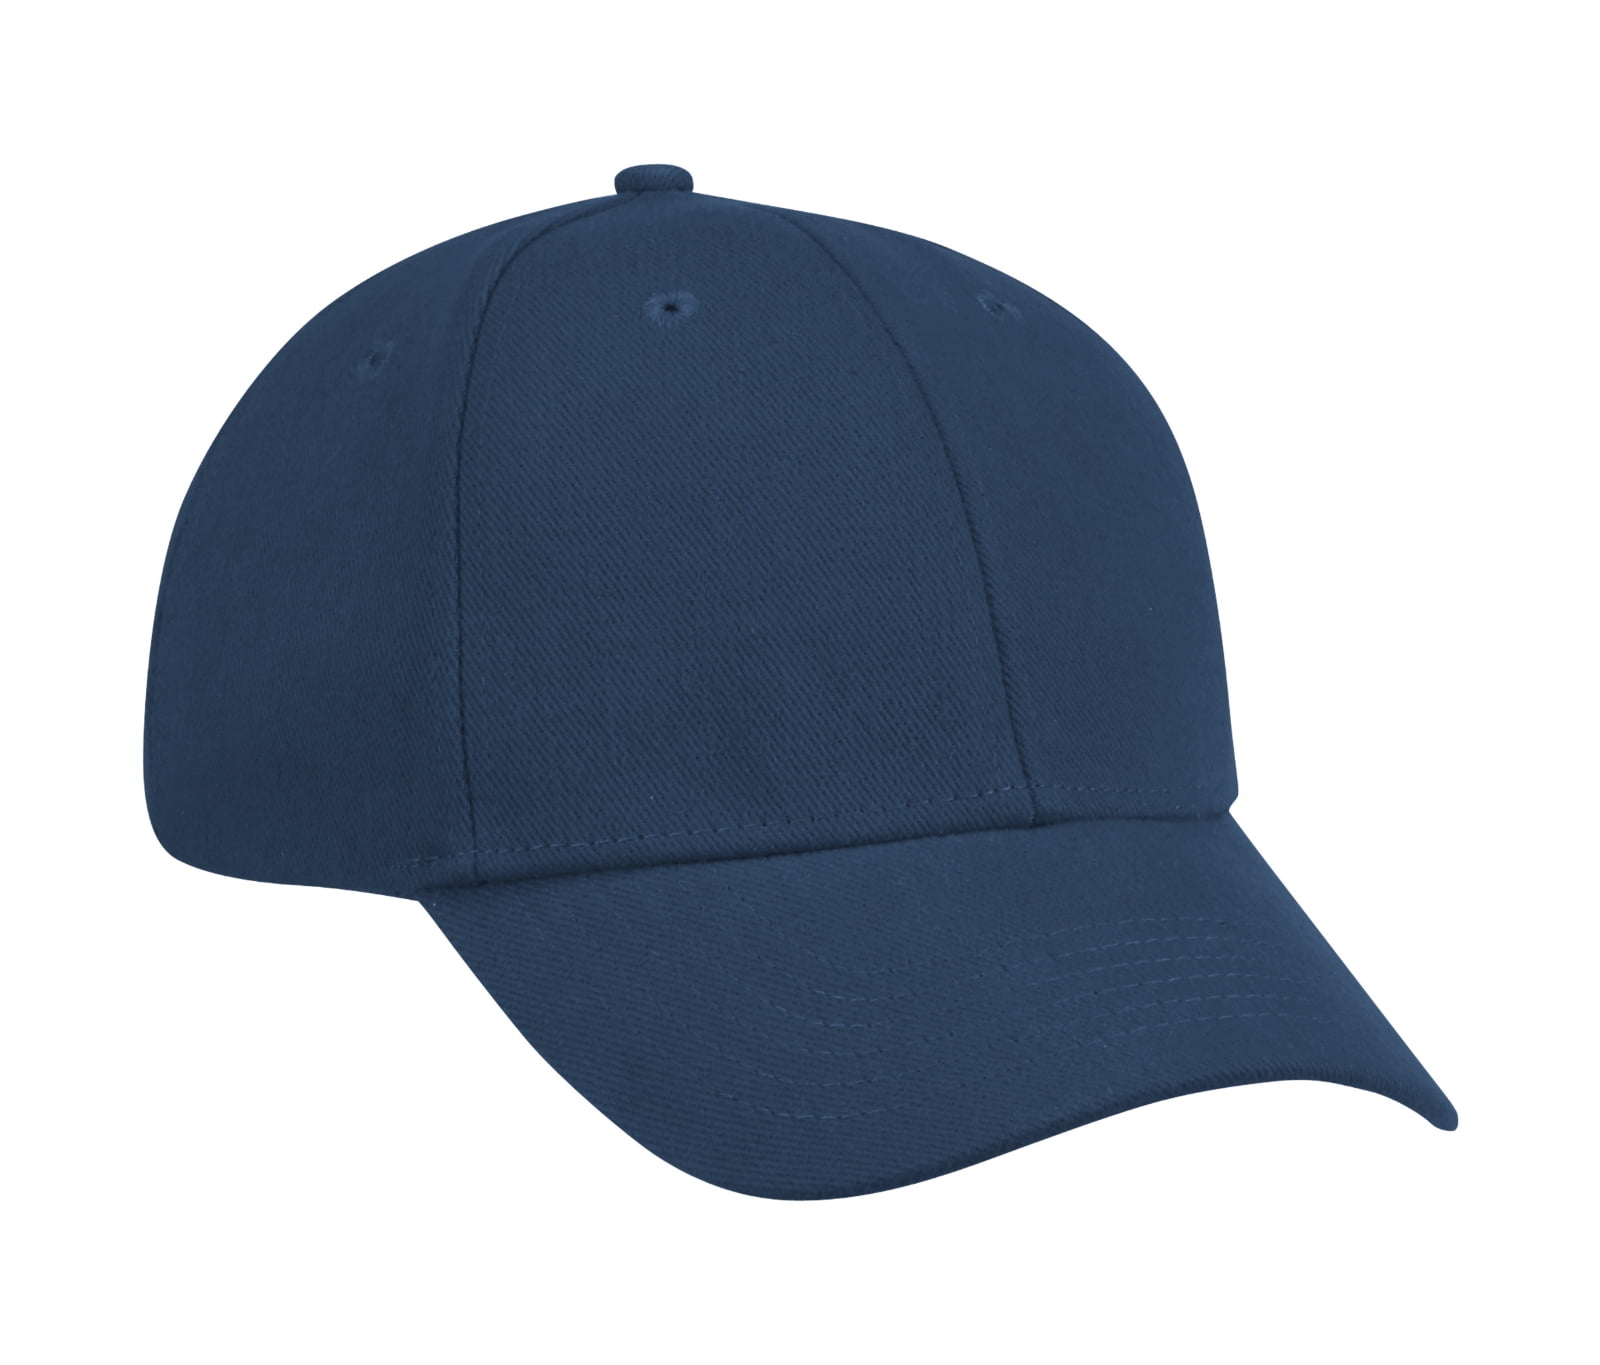 jinetor Unisex Full Mesh Baseball Cap Quick Dry Cooling Sunscreen Sports Snapback Hat Hot Pink